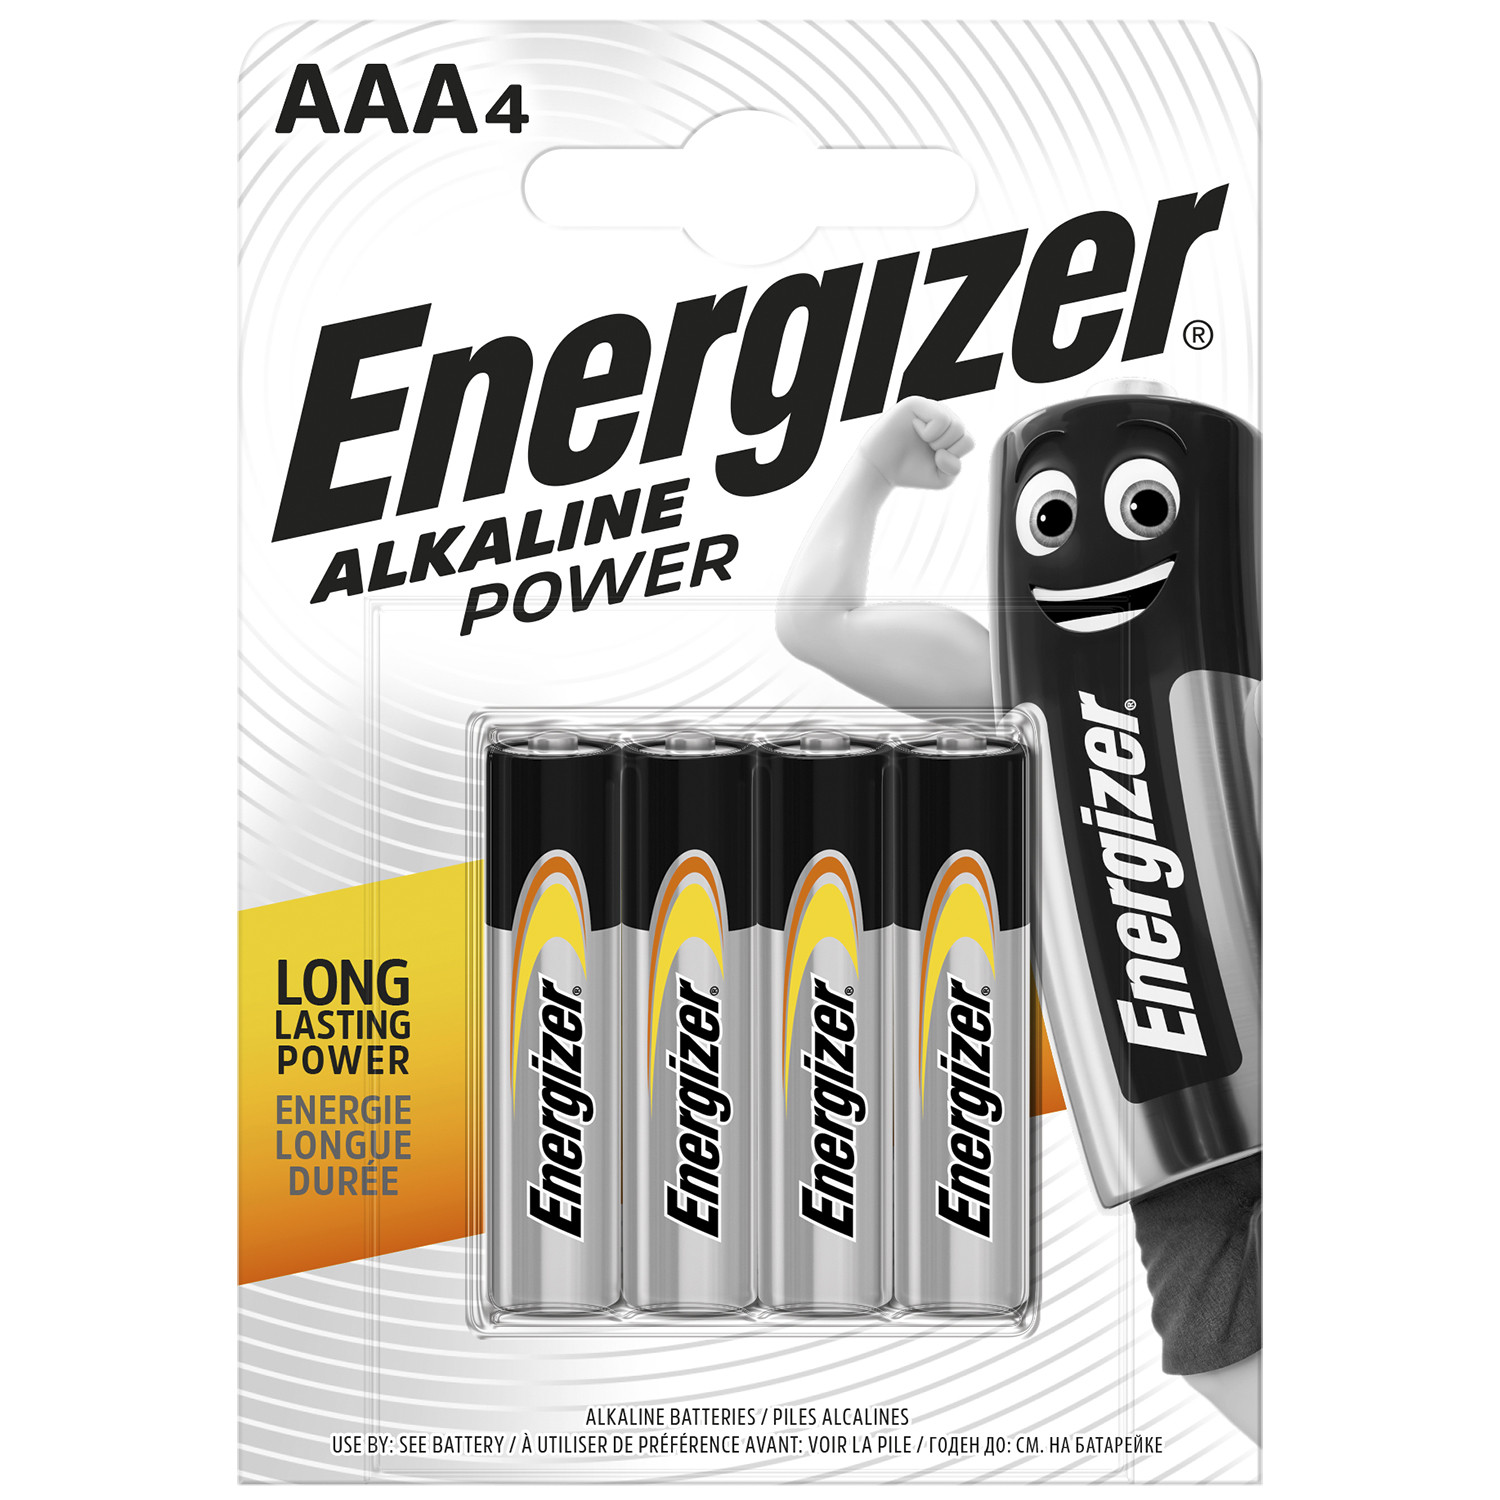 Energizer AAA 4 Pack Alkaline Power Batteries Image